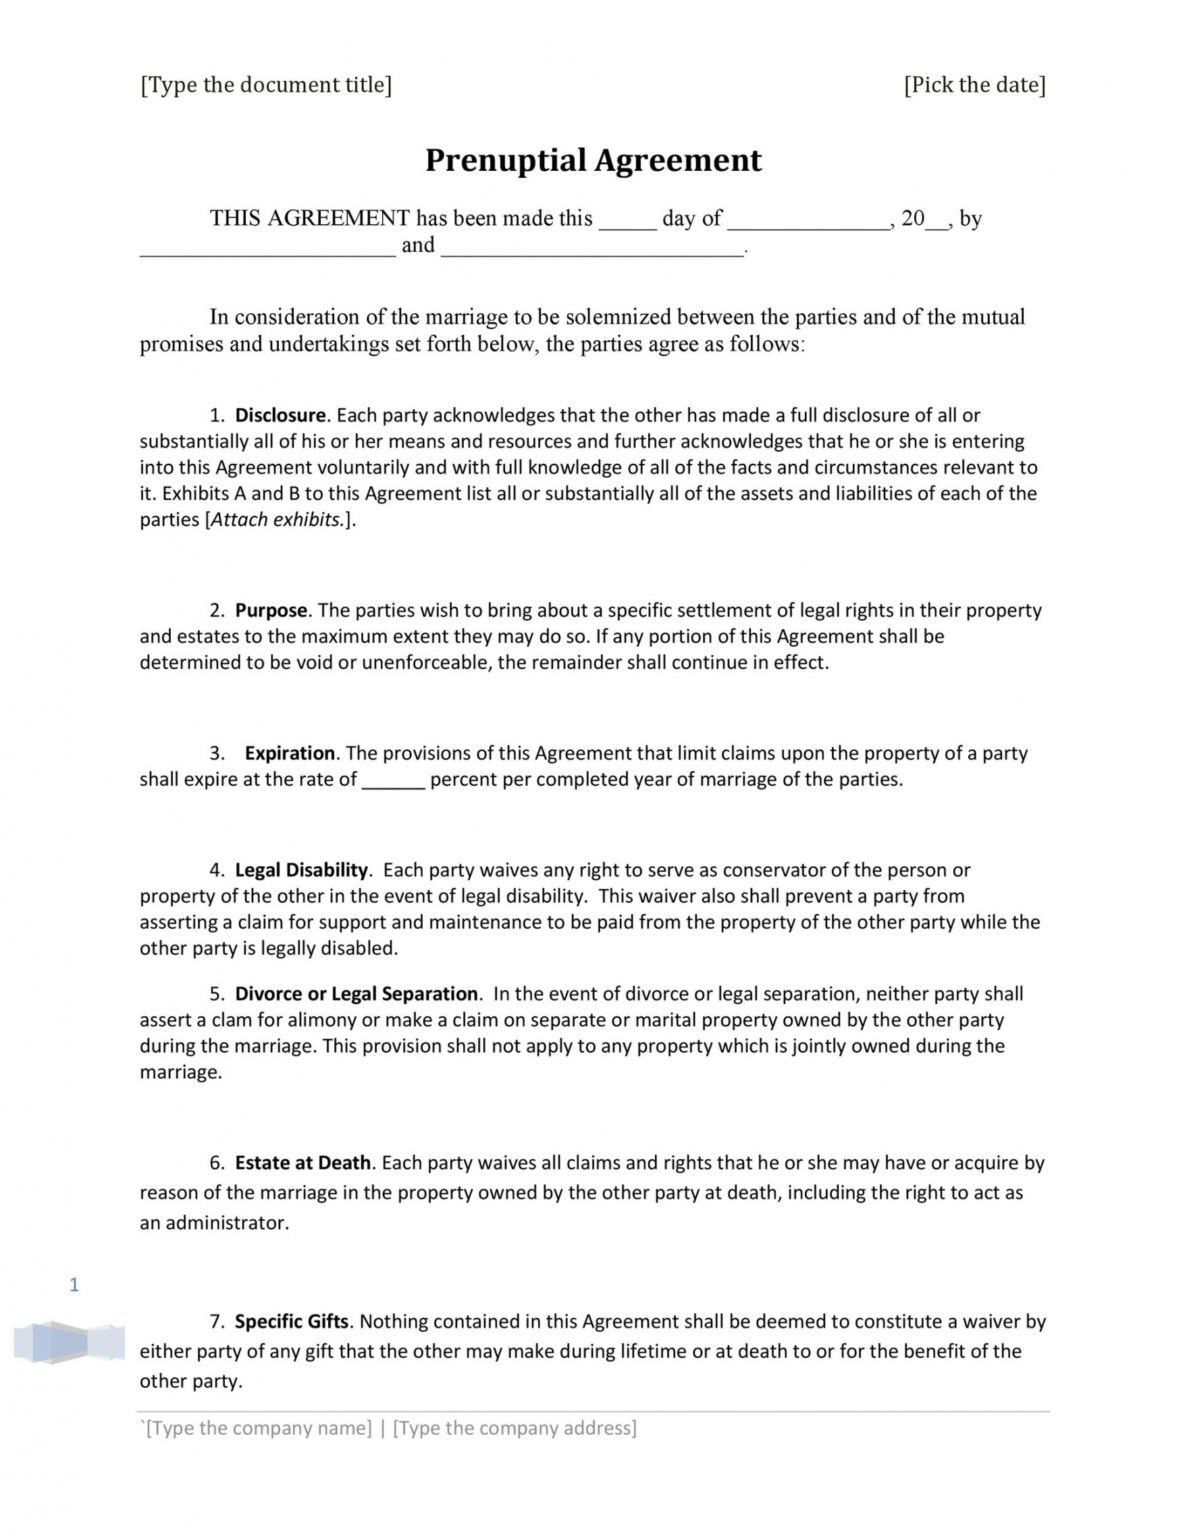 printable-30-prenuptial-agreement-samples-forms-templatelab